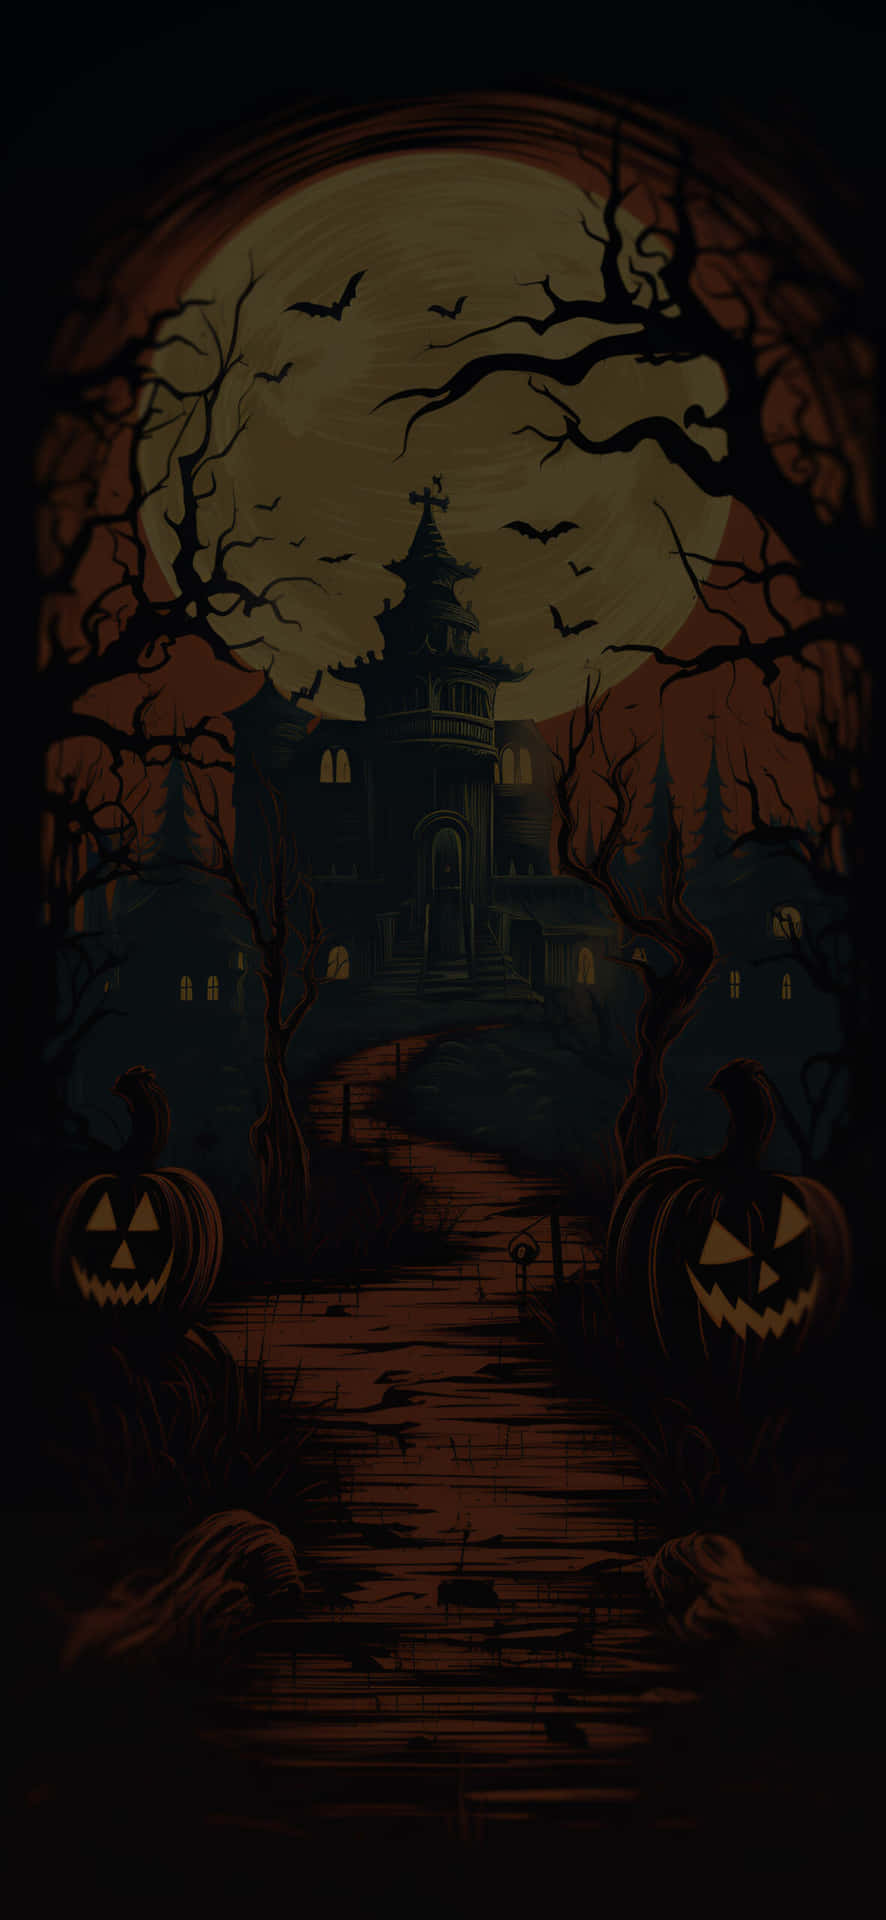 Spooky Halloween Mansion Illustration Wallpaper